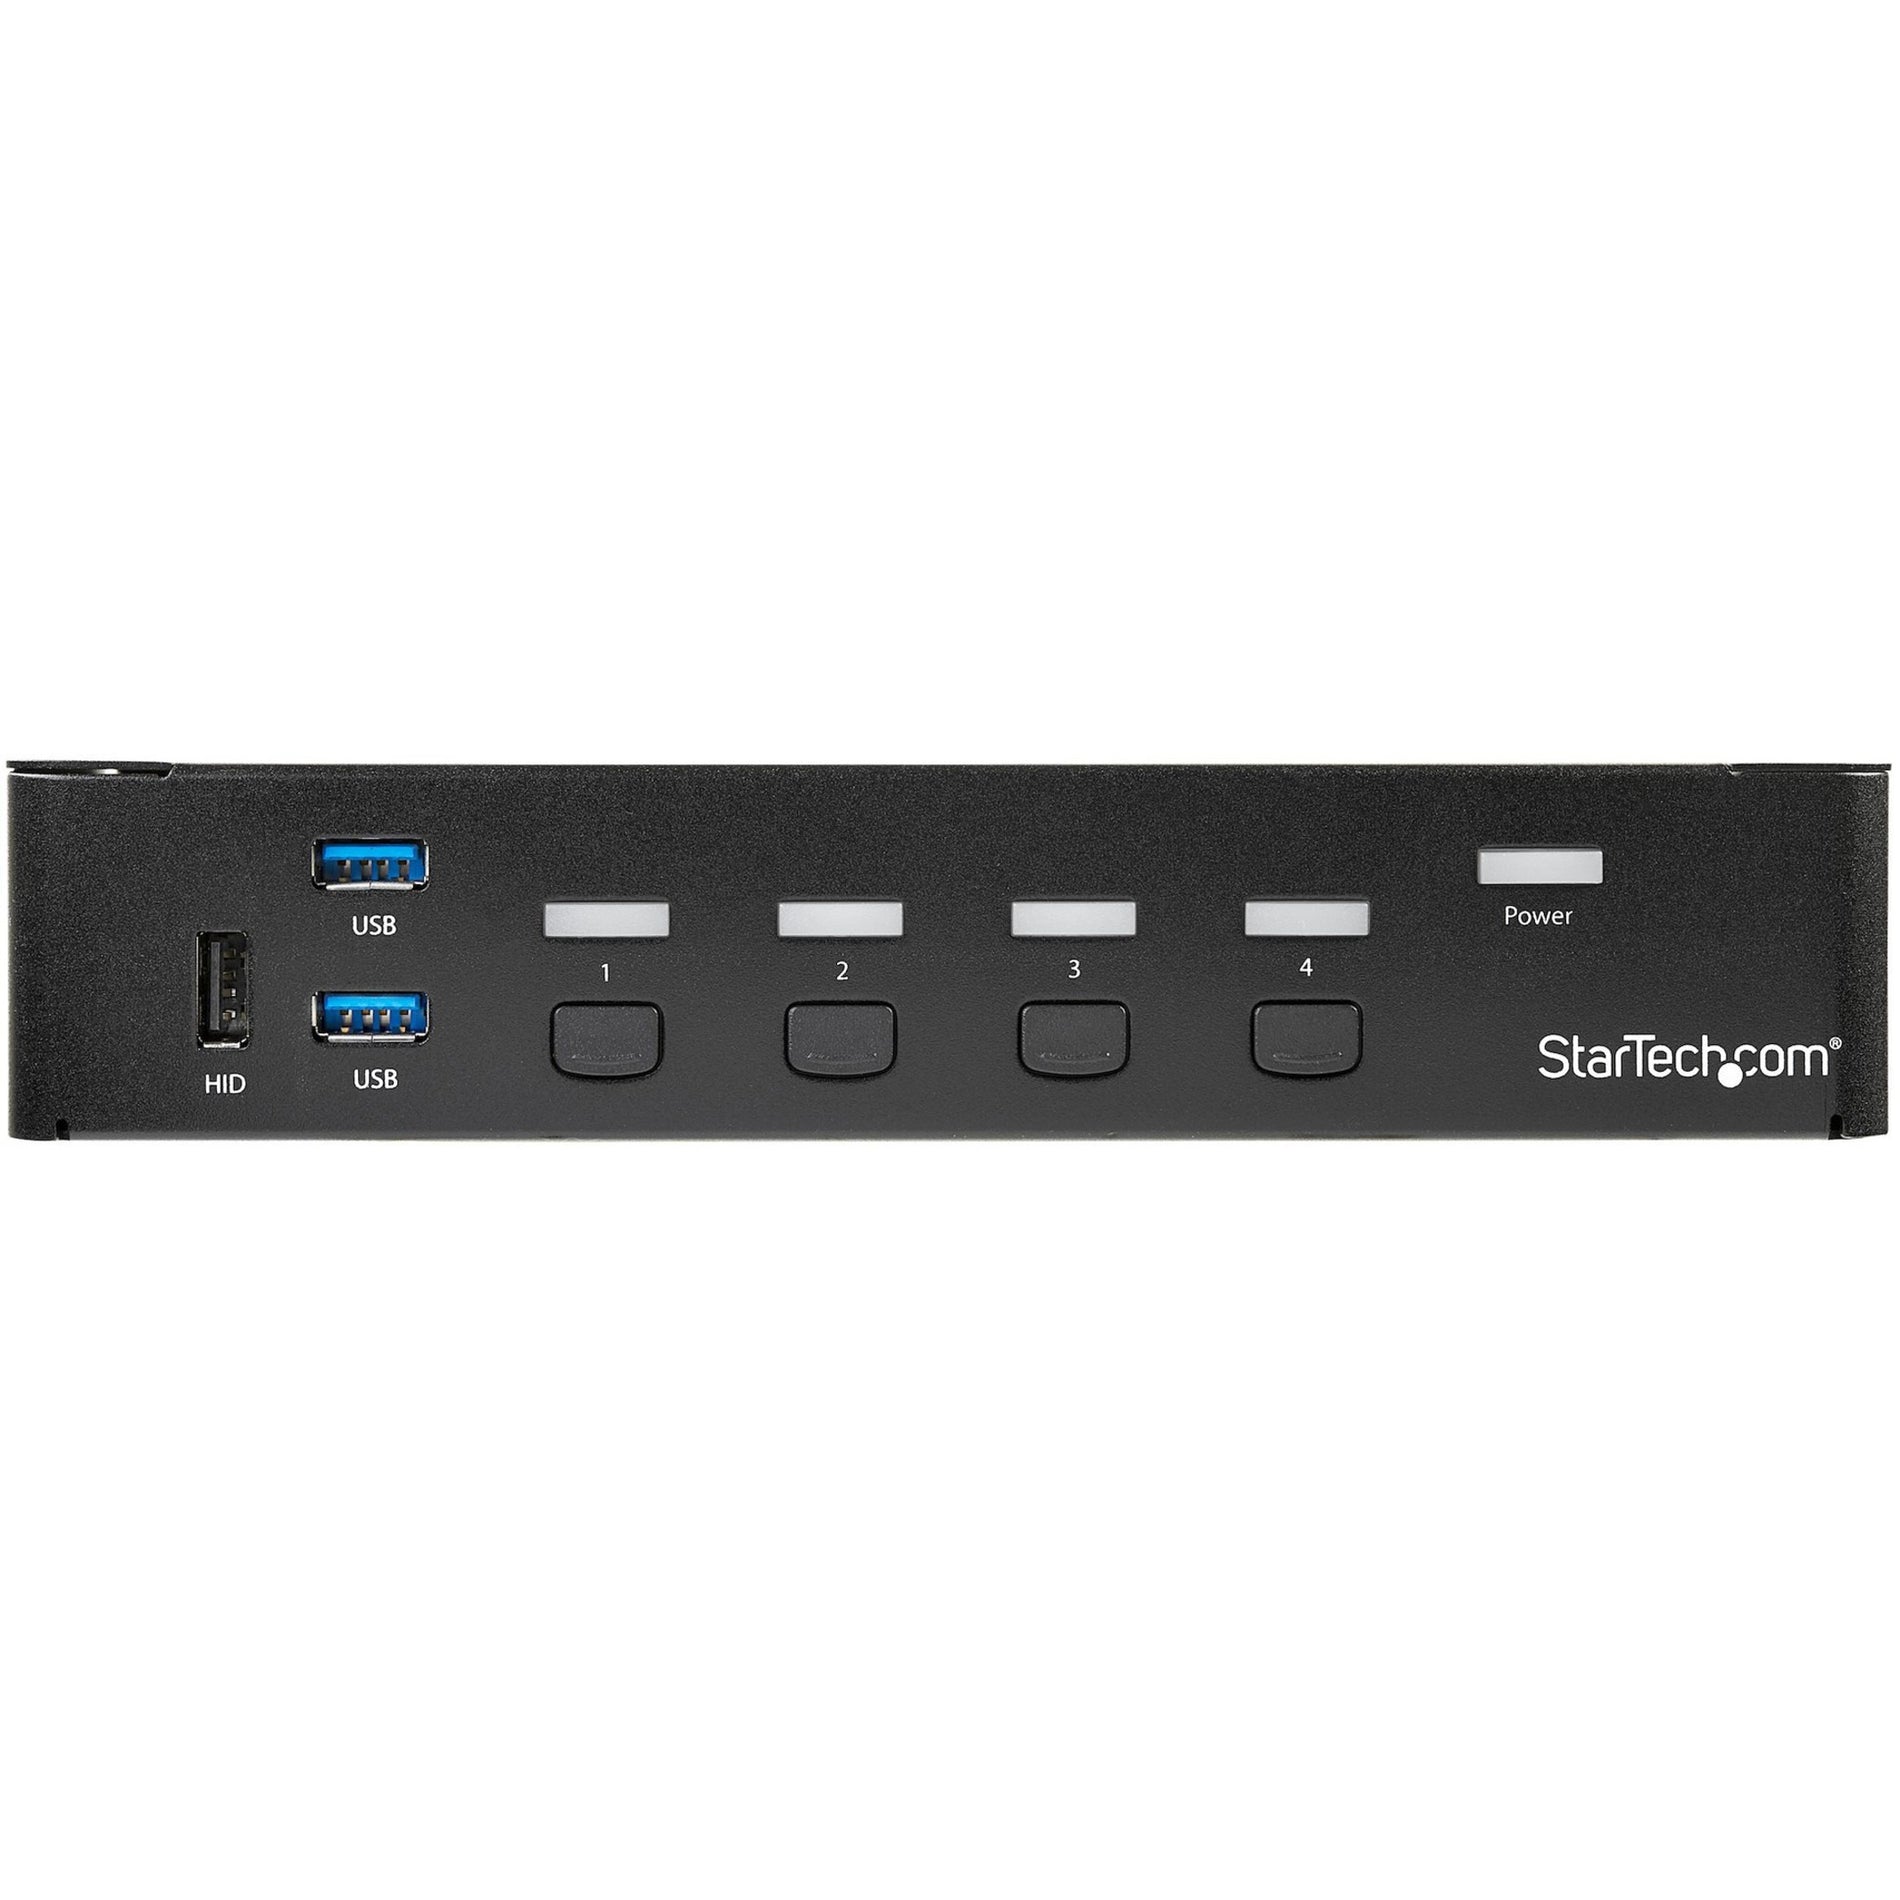 StarTech.com SV431DPU3A2 4-Port DisplayPort KVM Switch - USB 3.0 - 4K、周辺機器用の内蔵USB 3.0ハブ。StarTech.com を変換すると、スターテック社となります。